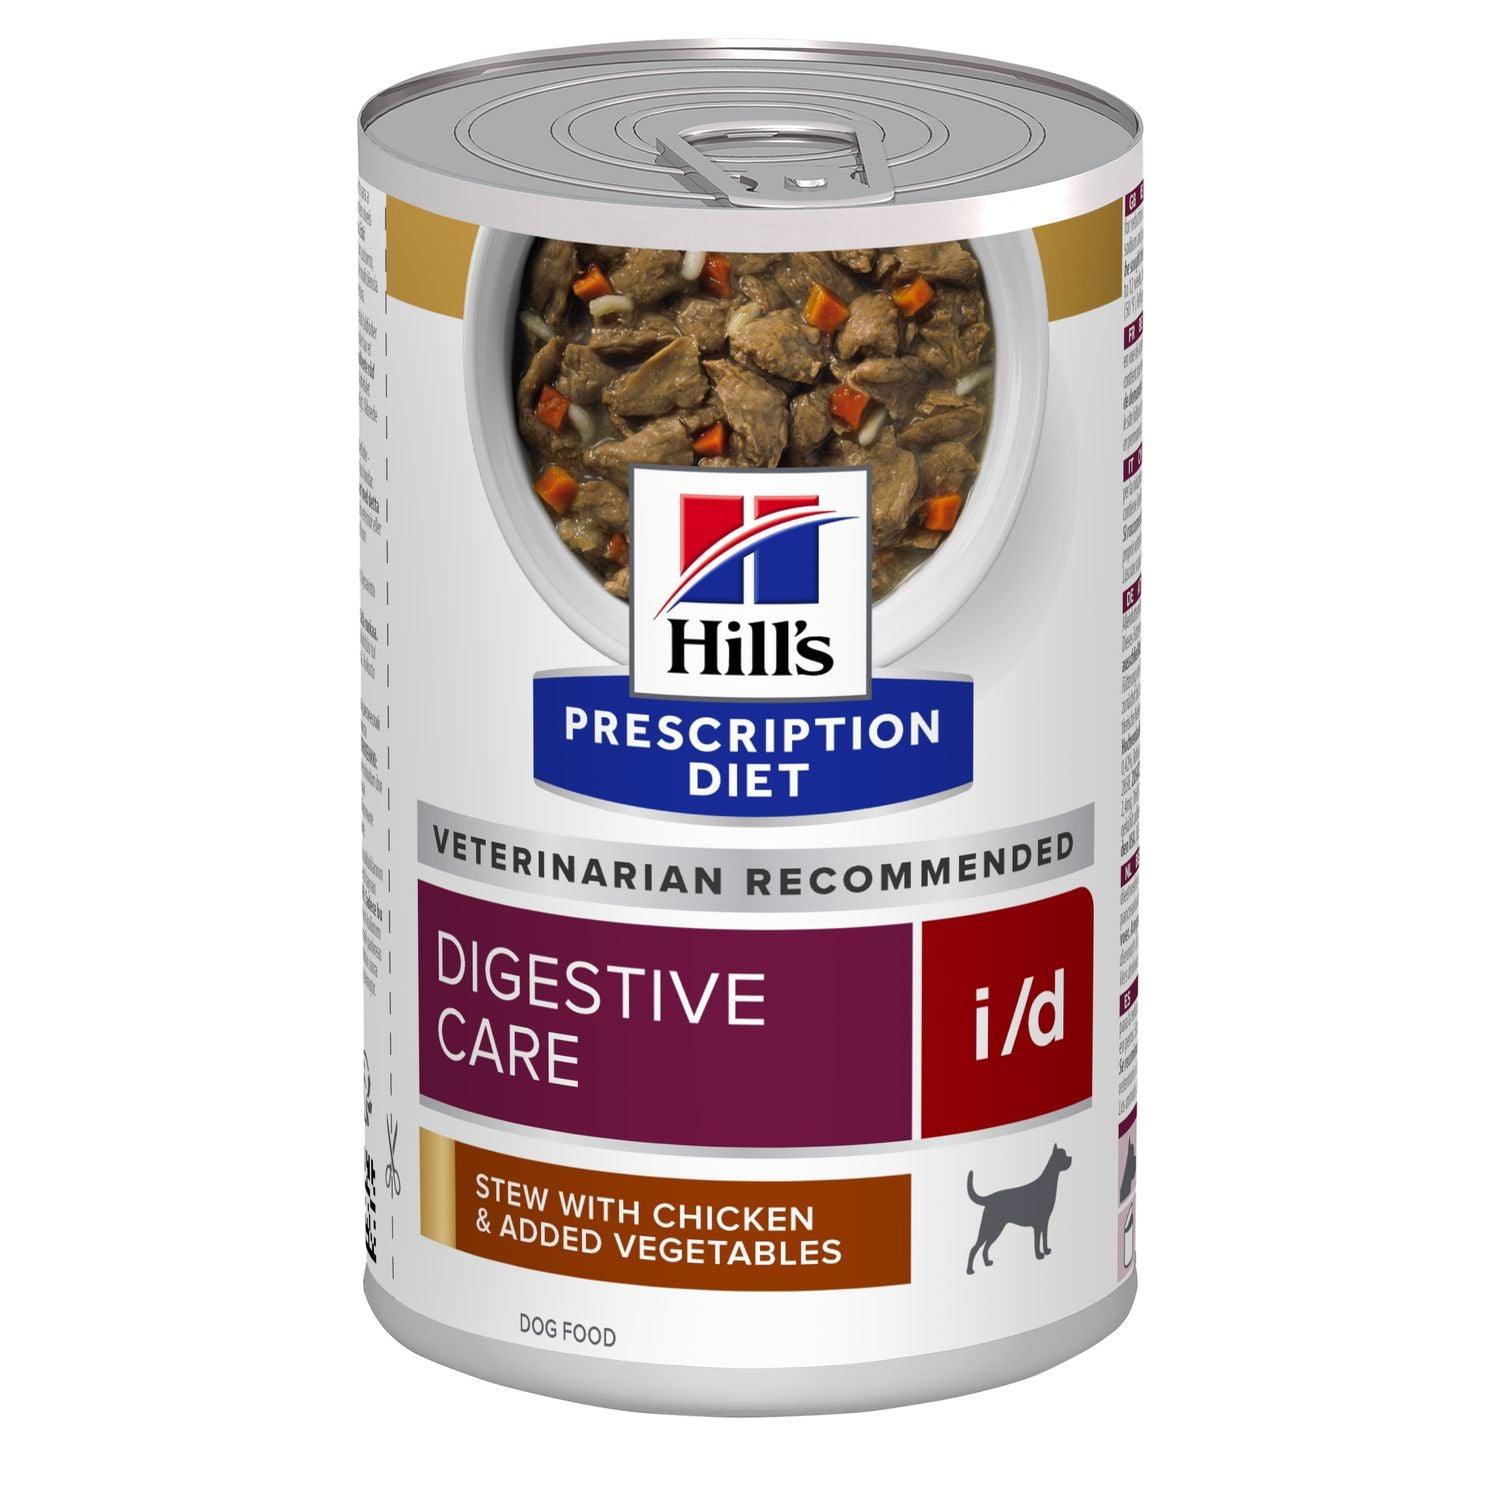 Canine i/d Ragout - Hill's Prescription Diet - Alter:Adult, Alter:Senior, Erkrankung:Magen-Darm, Erkrankung:zur Erholung, Futterart:Nass, Geschmack:Huhn, Tierart:Hund - Marigin AG Onlineshop für Tierbedarf